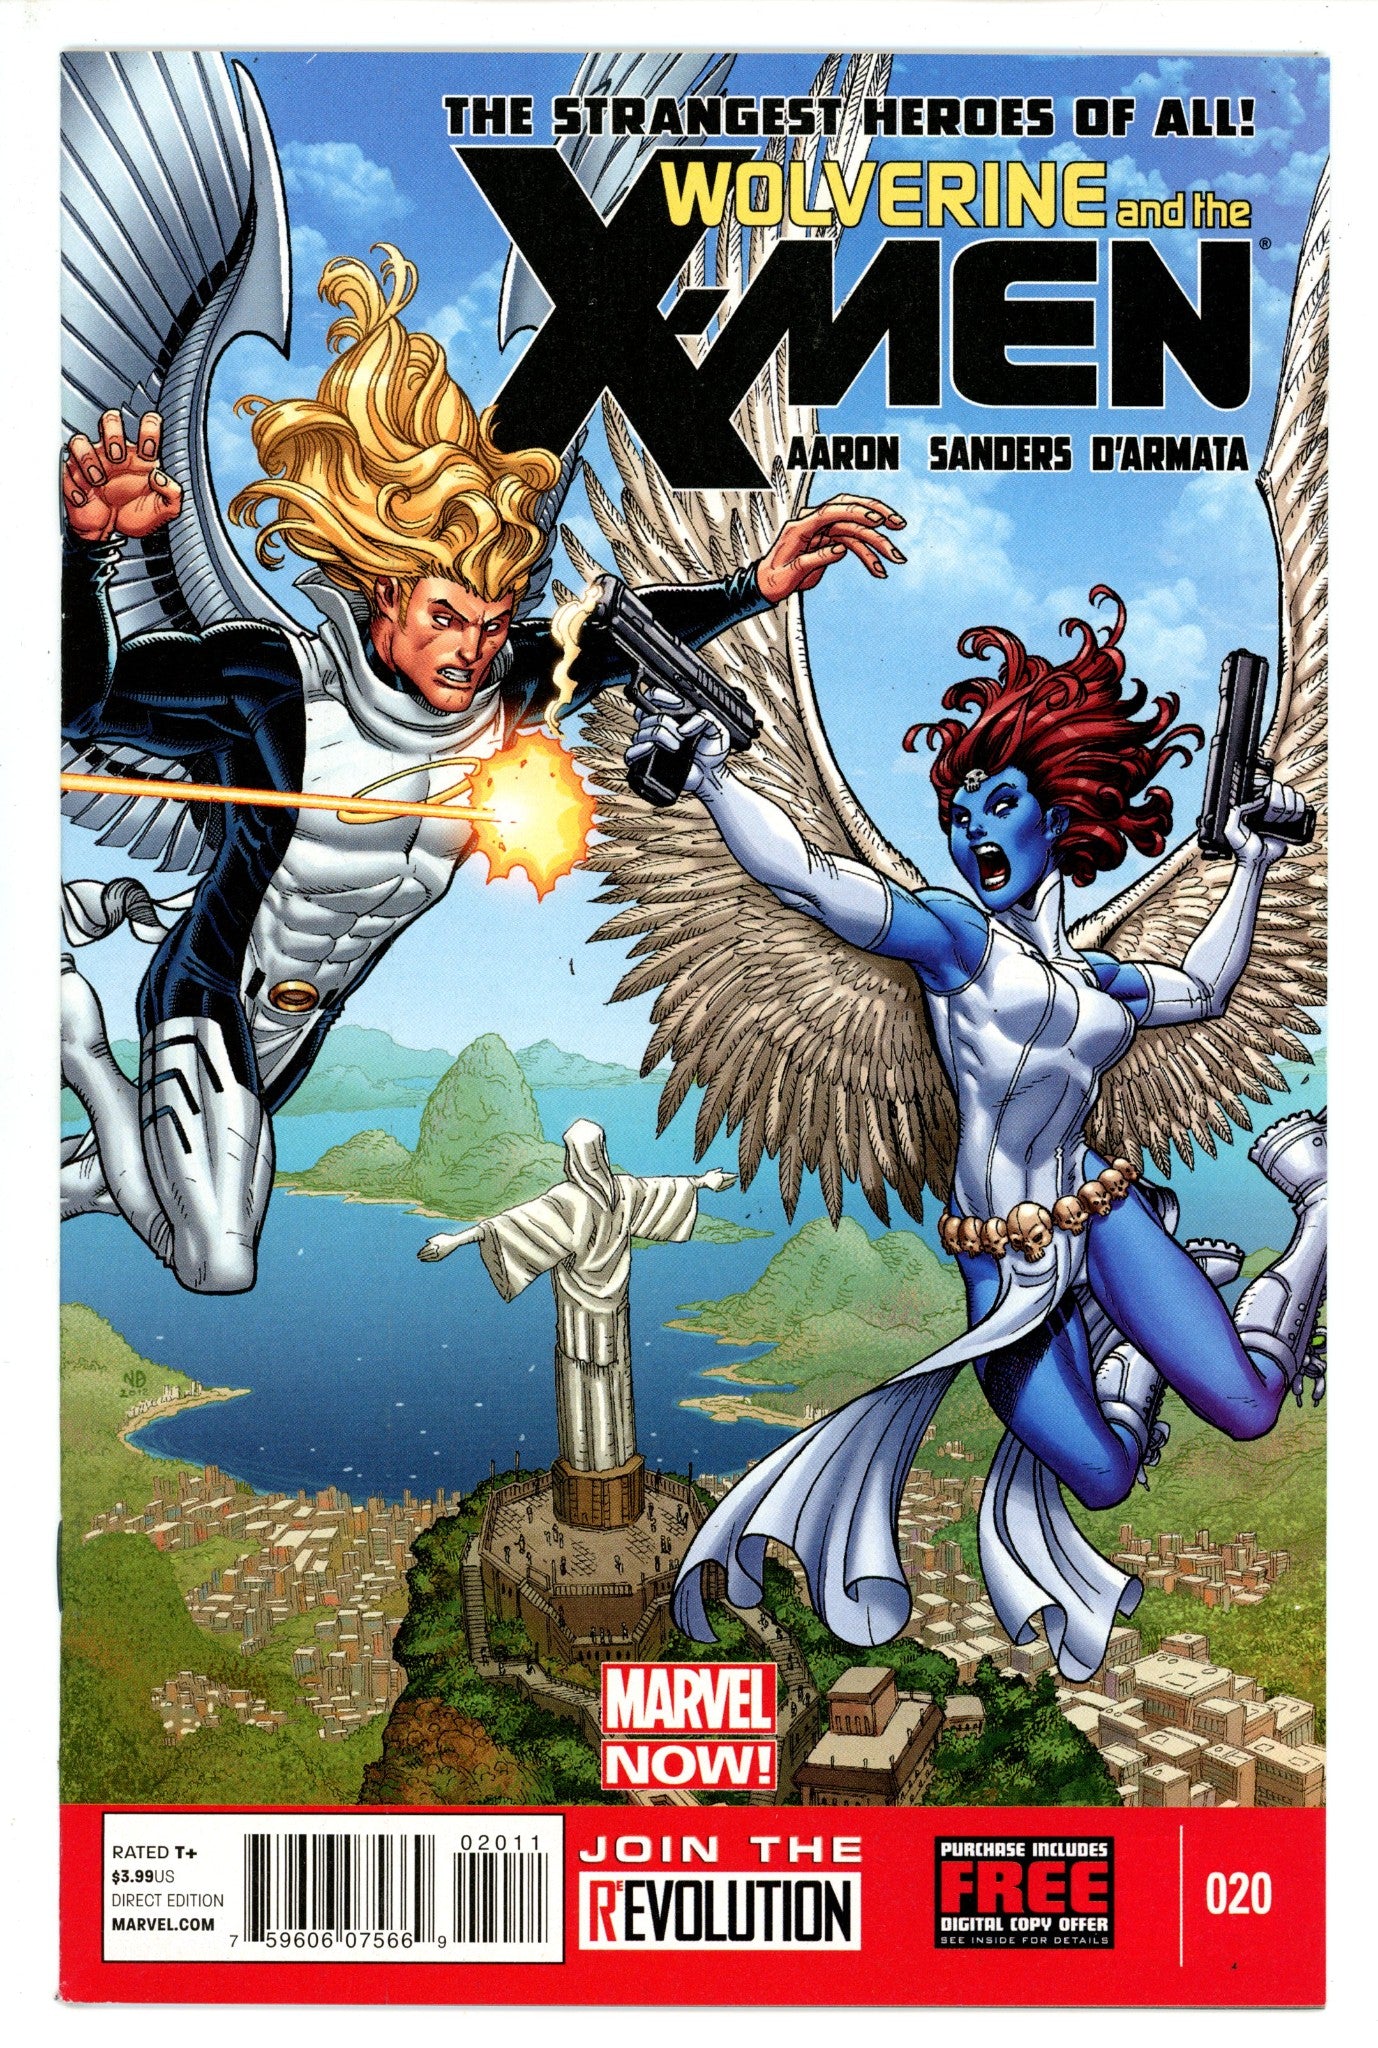 Wolverine & the X-Men Vol 1 20 (2013)